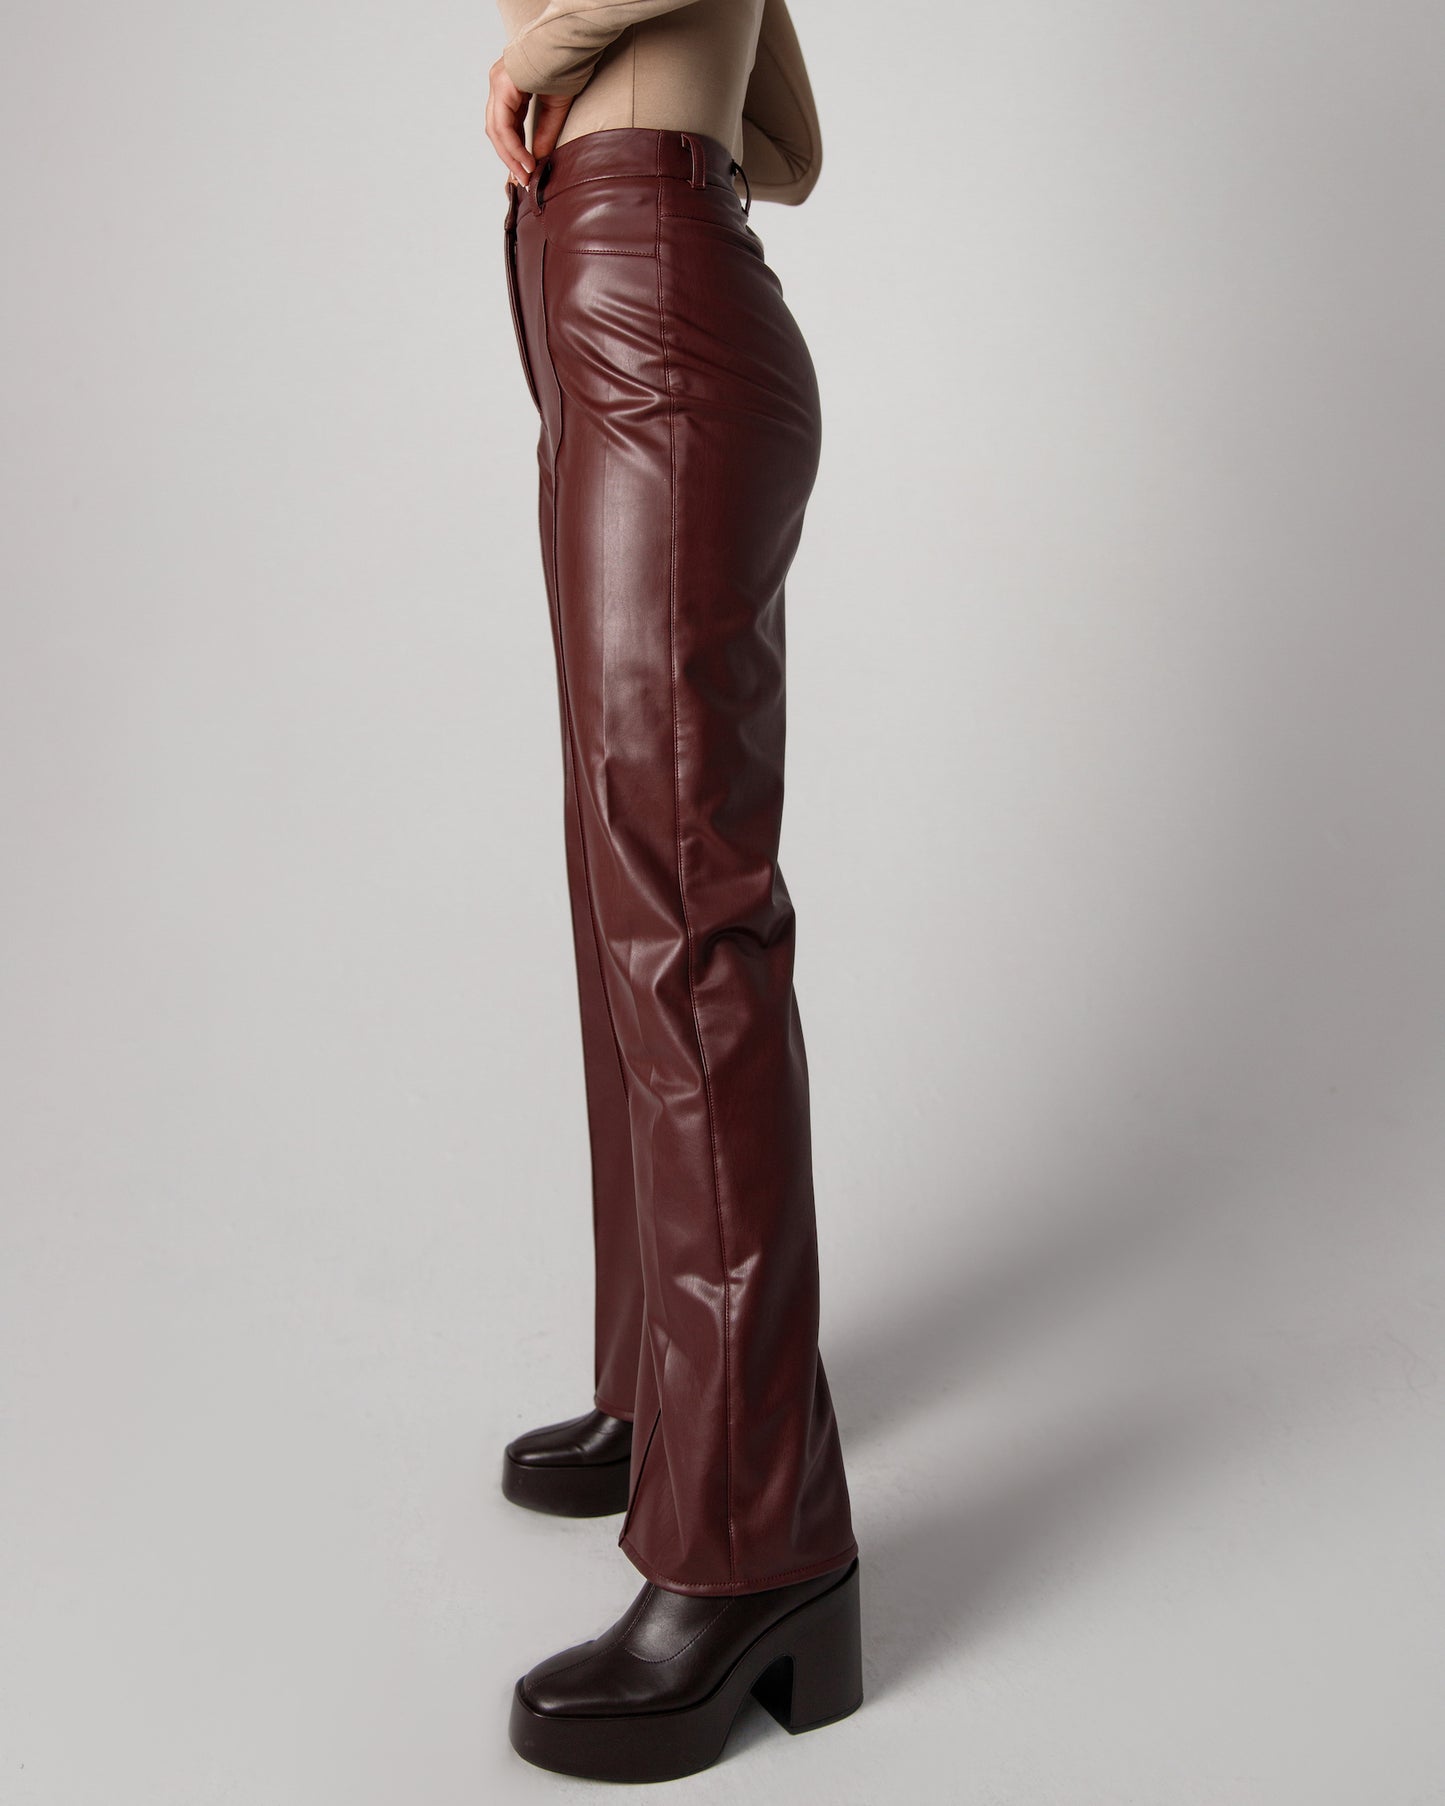 Soft vegan leather pants in maroon